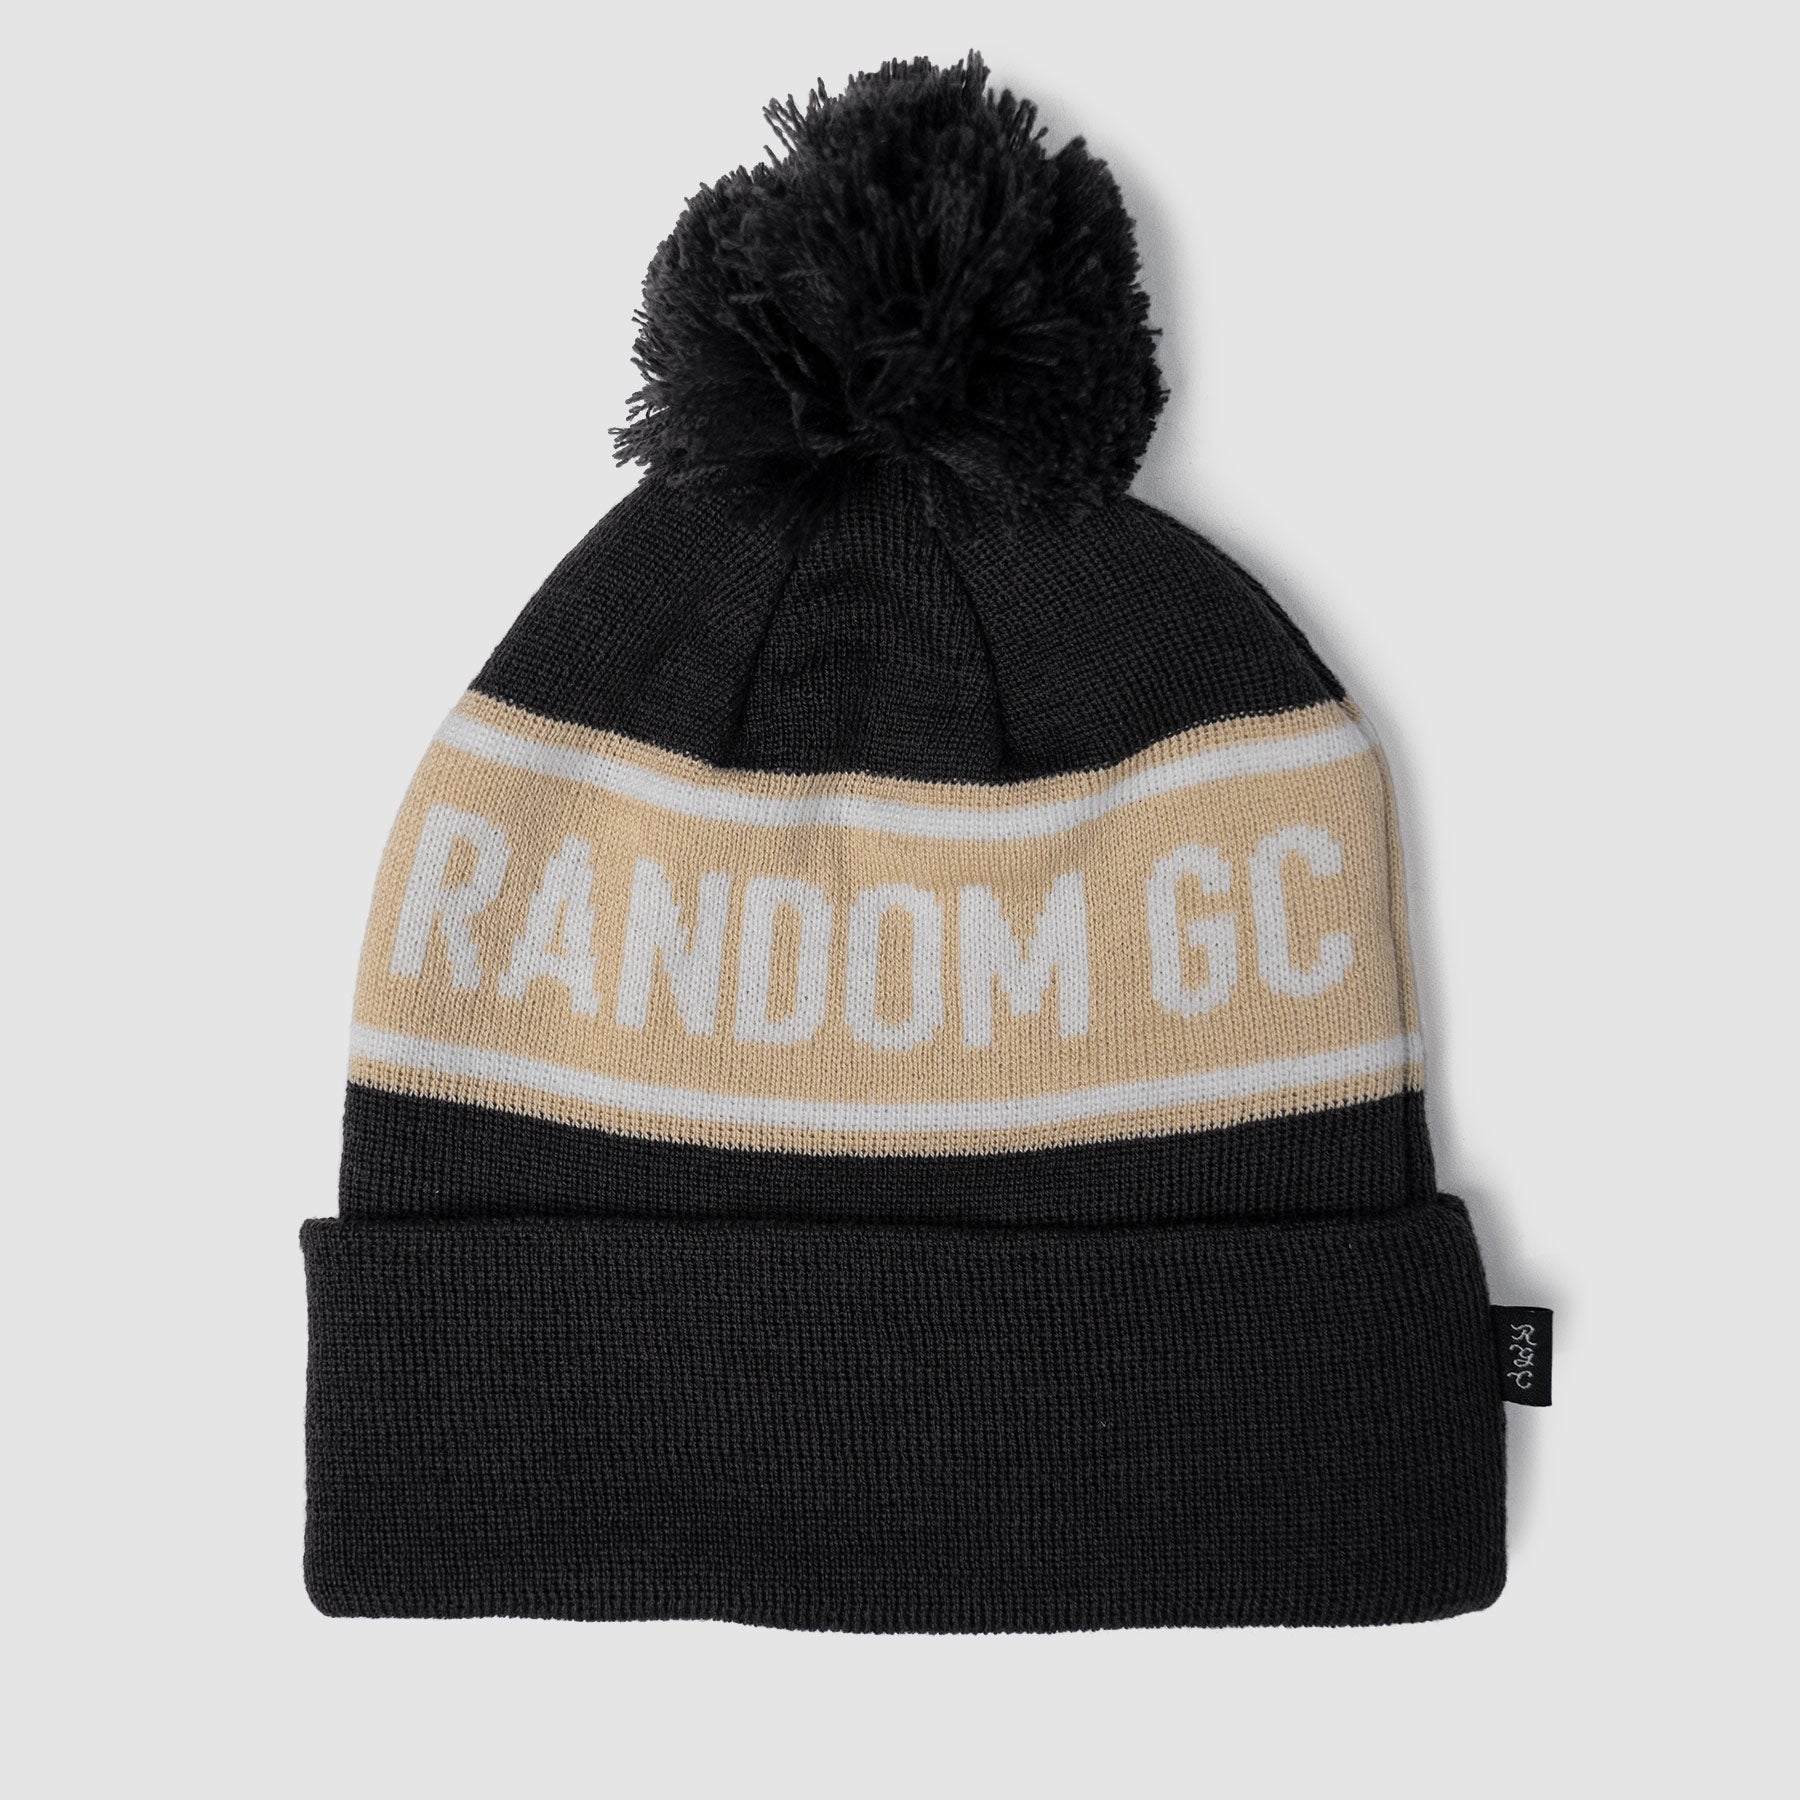 GC2 Winter Hat